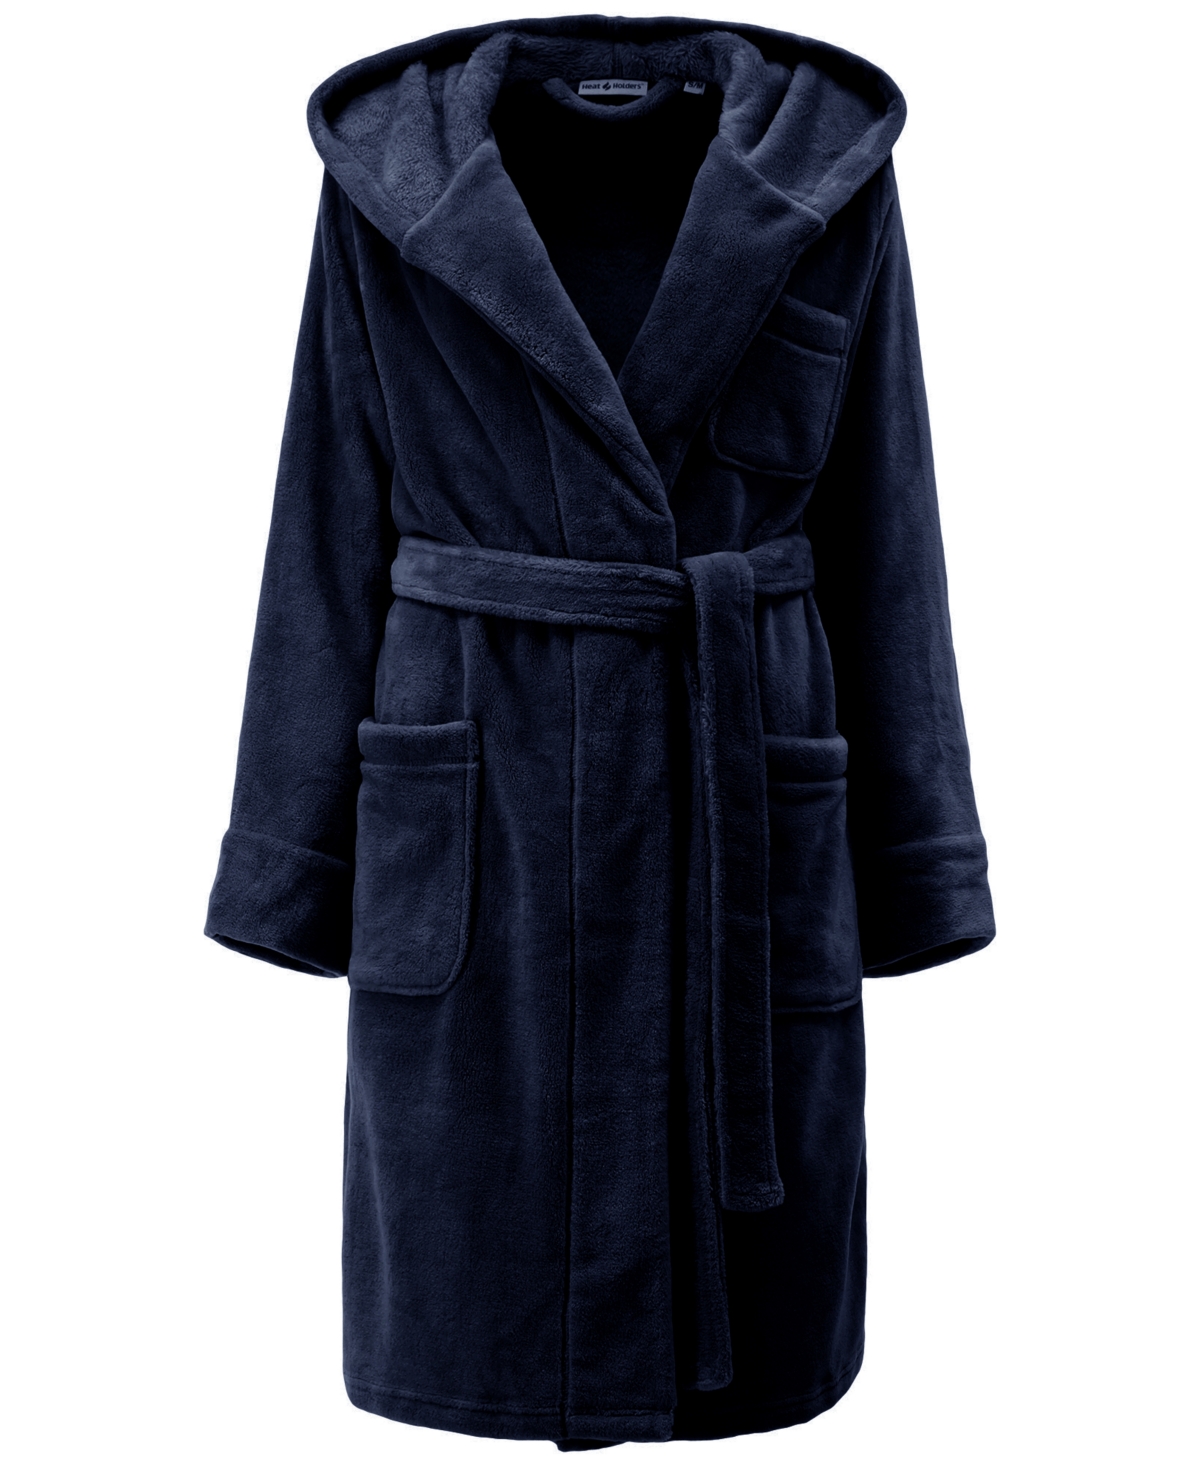 Women's Long-Sleeve Spa Robe - Navy